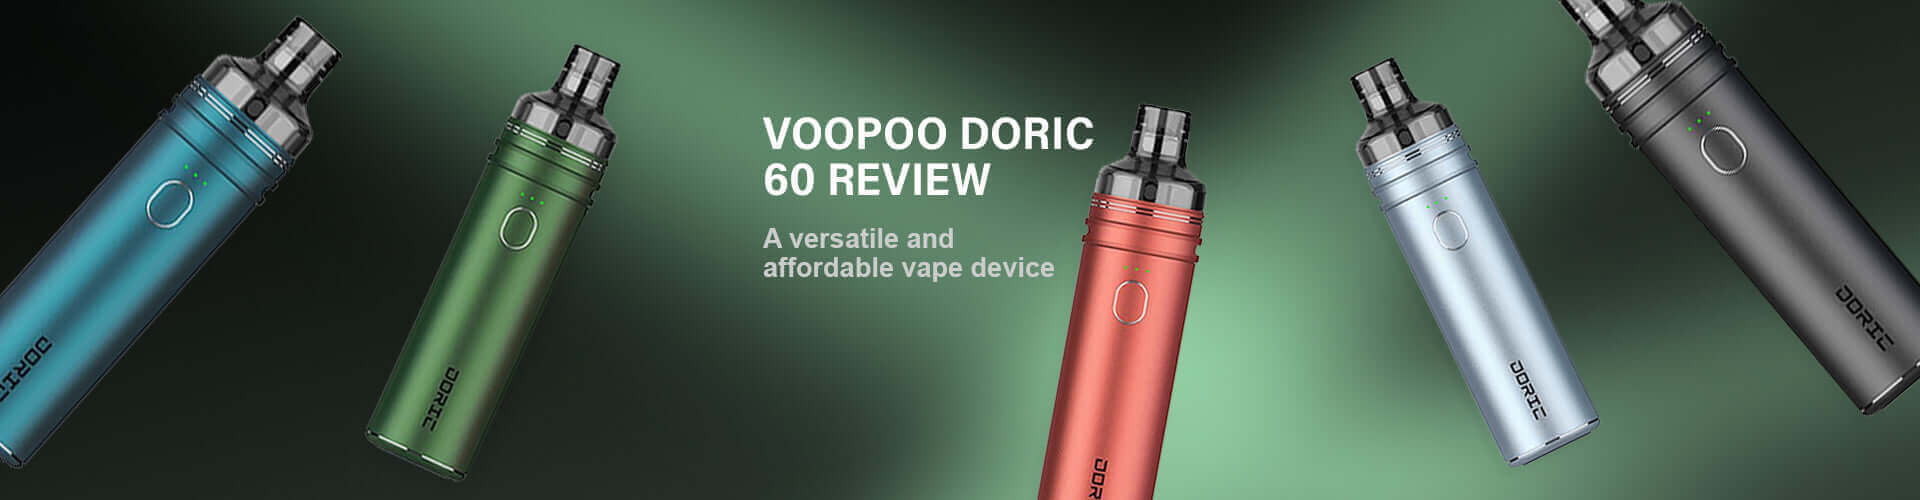 VooPoo Doric 60 Review: A versatile and affordable vape device - 888 Vapour